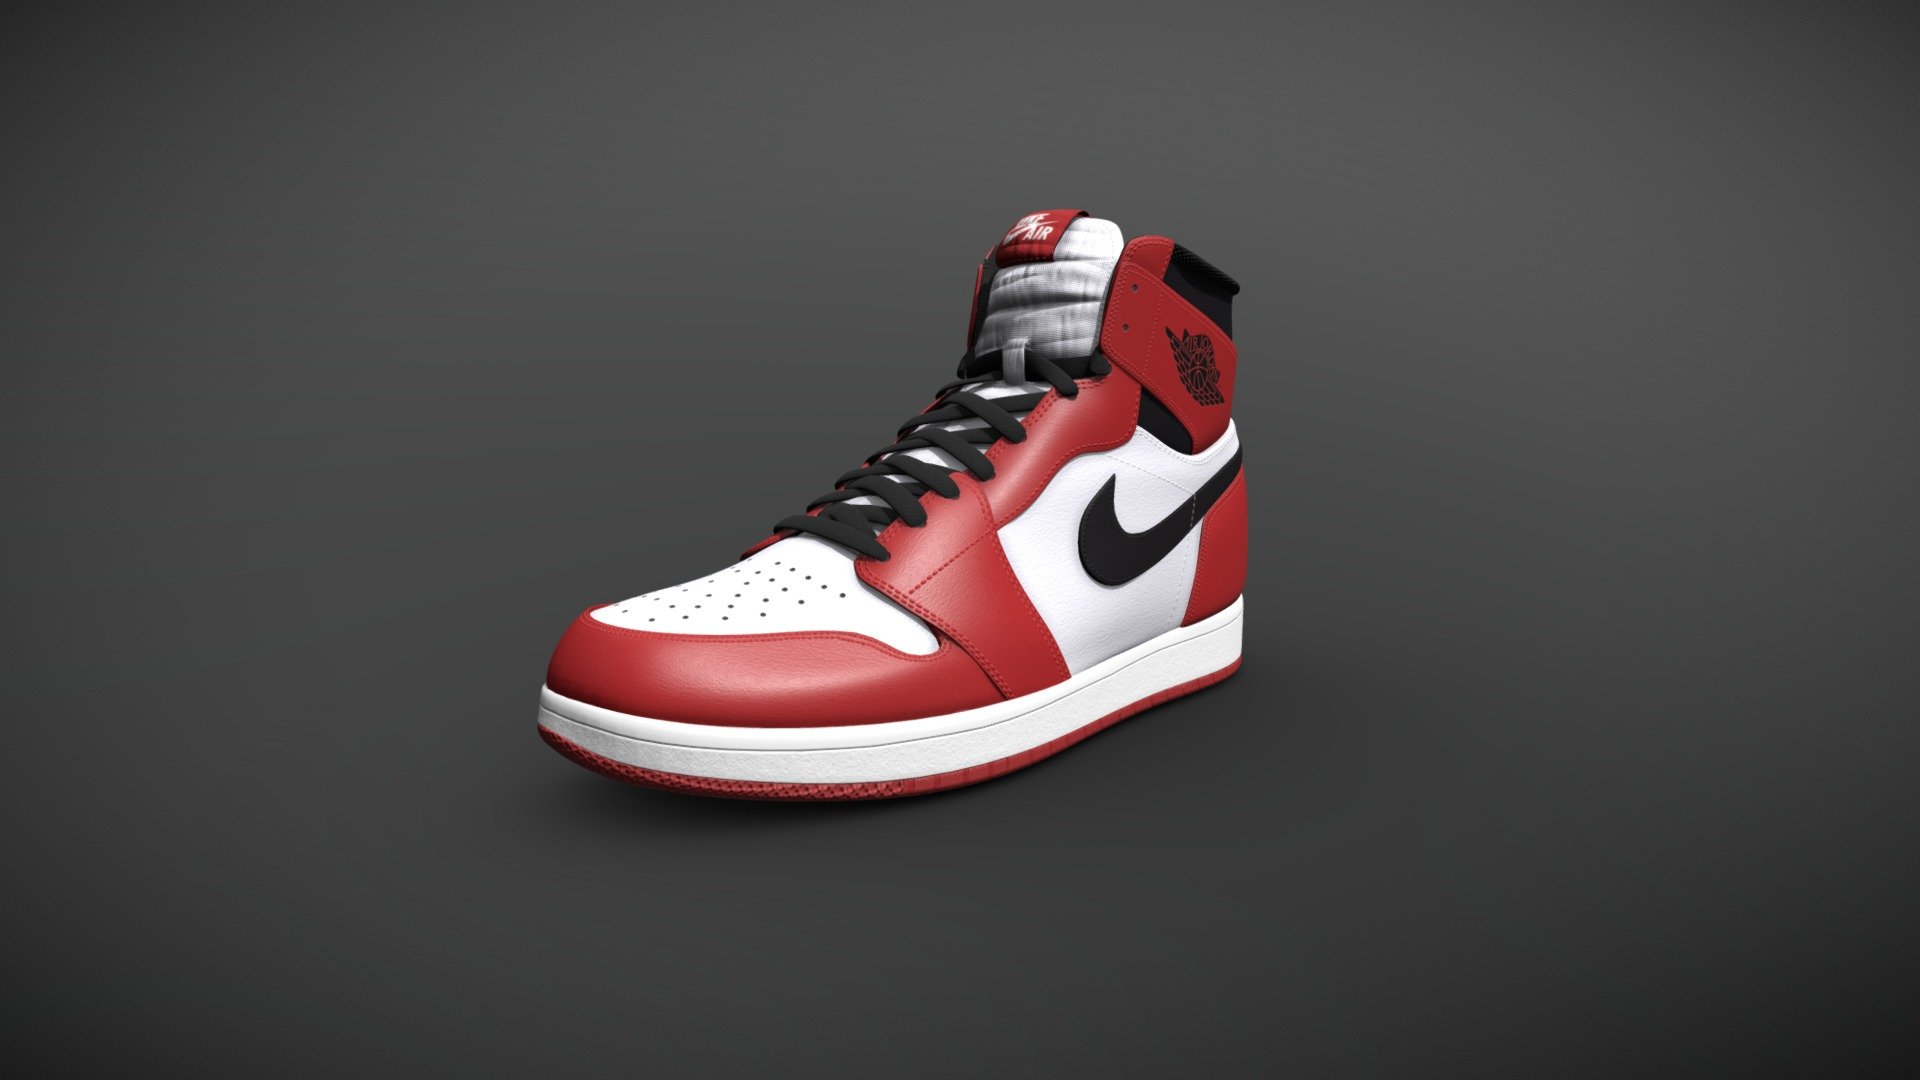 3D Model of a Nike Jordan 1 High. Made with Maya and Substance.

ArtStation: https://www.artstation.com/adedesign - Nike Air Jordan 1 Retro High OG Chicago - 3D model by Adrián García (@adrigx2) 3d model